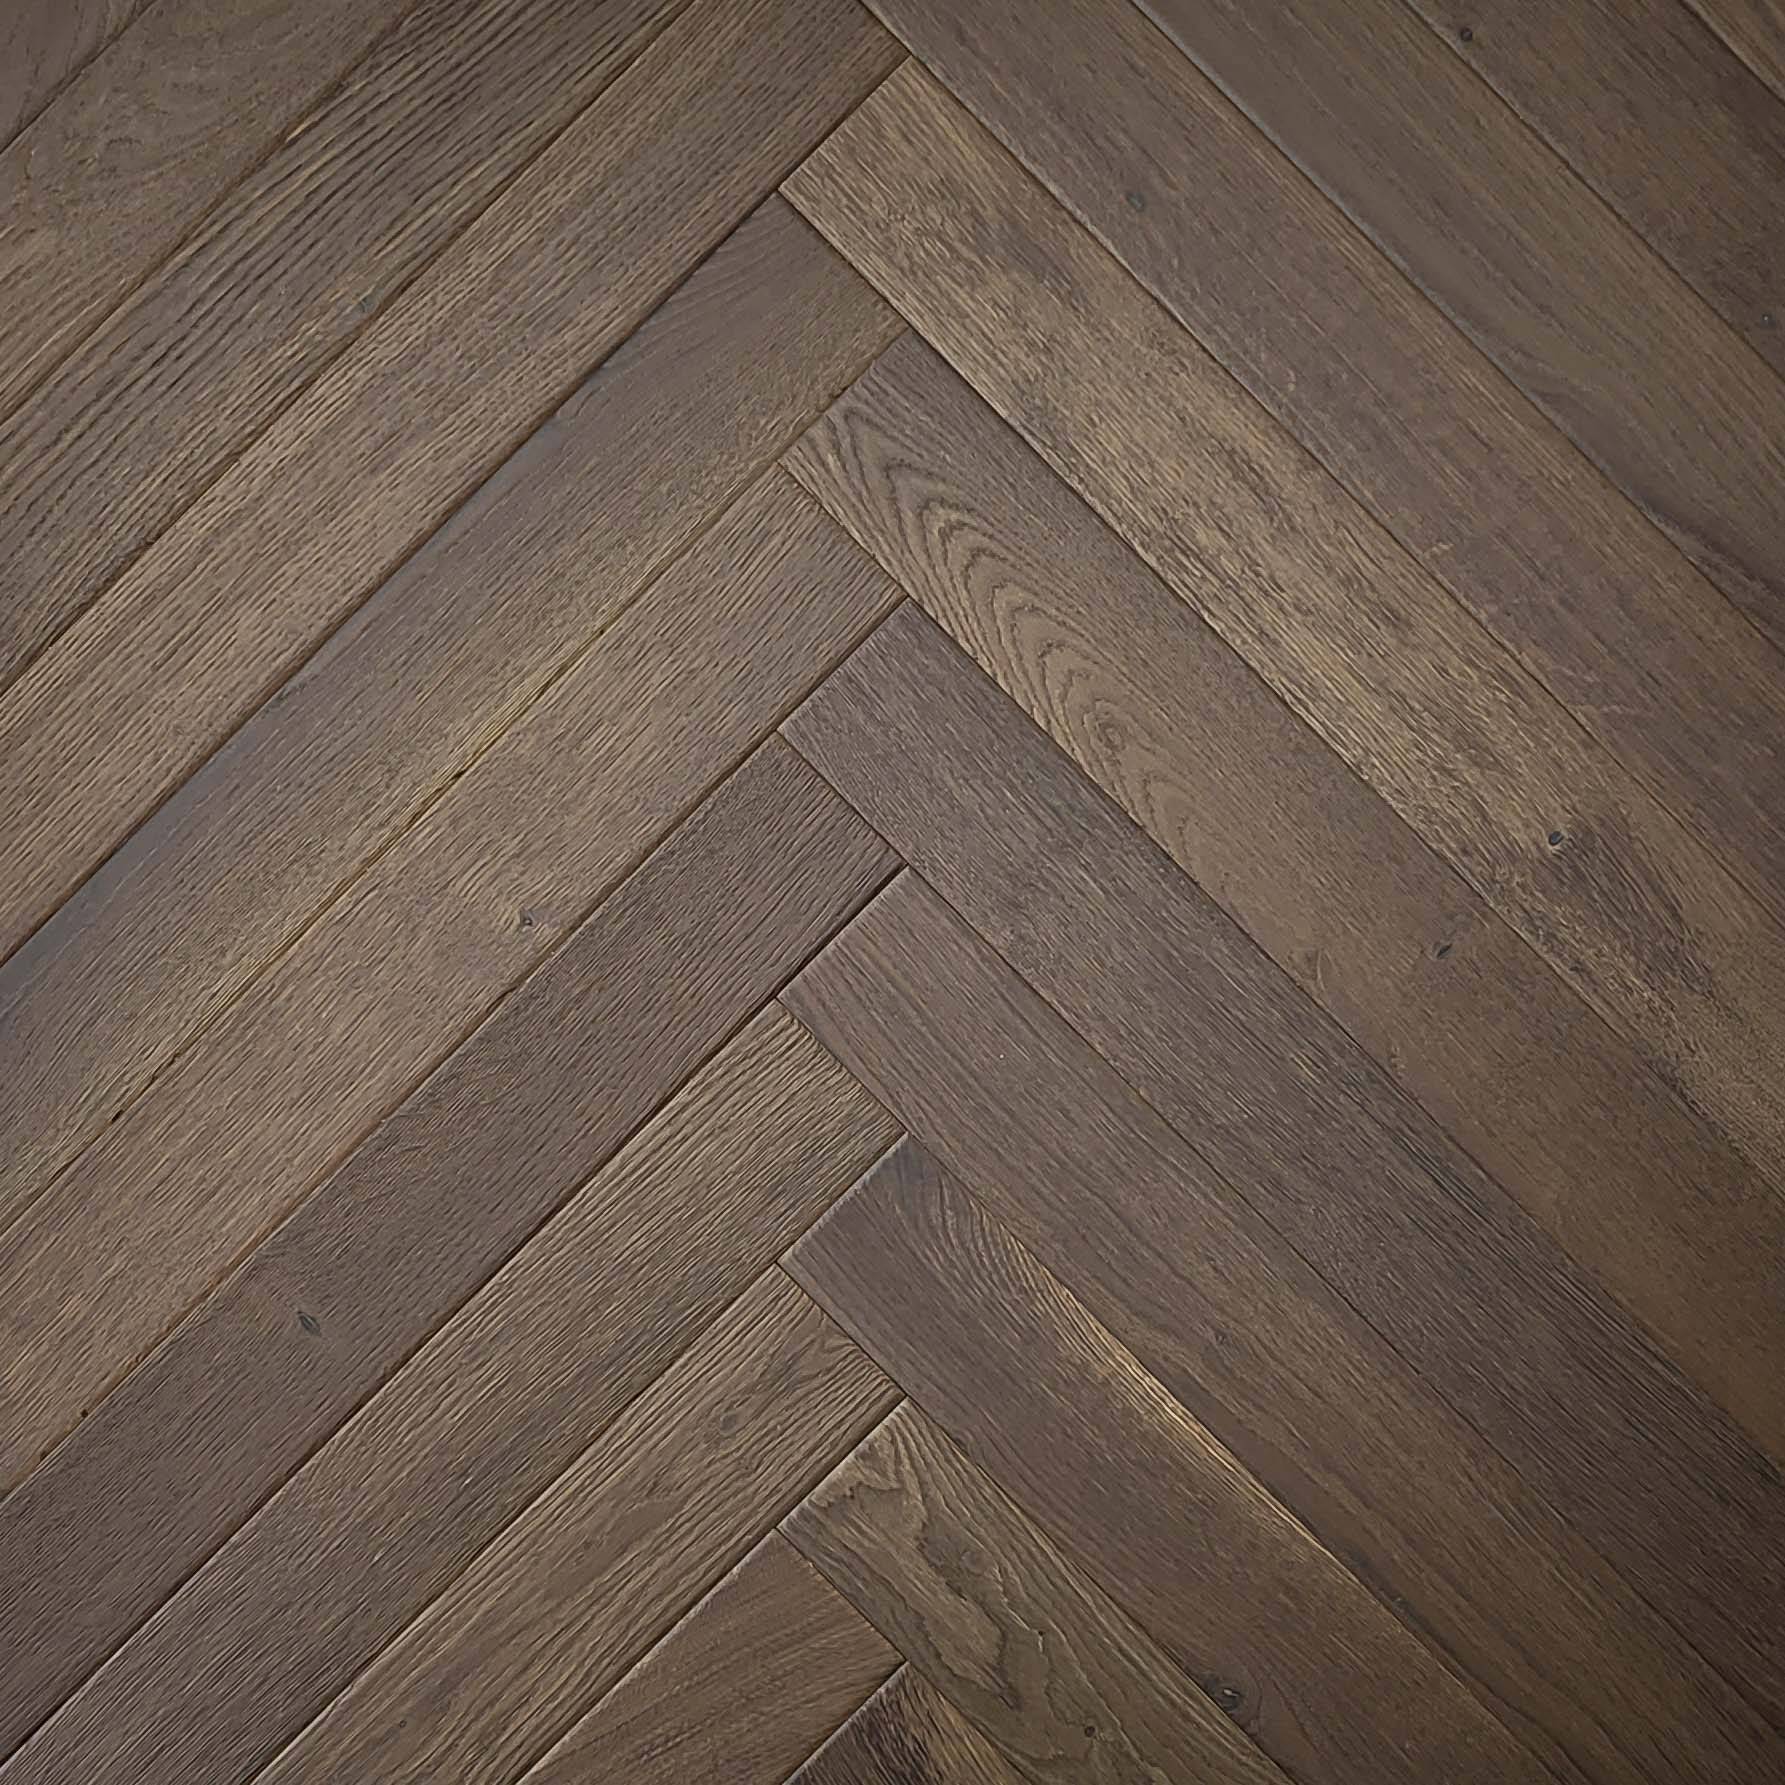 Medium Thermo Oak Herringbone Wood Flooring